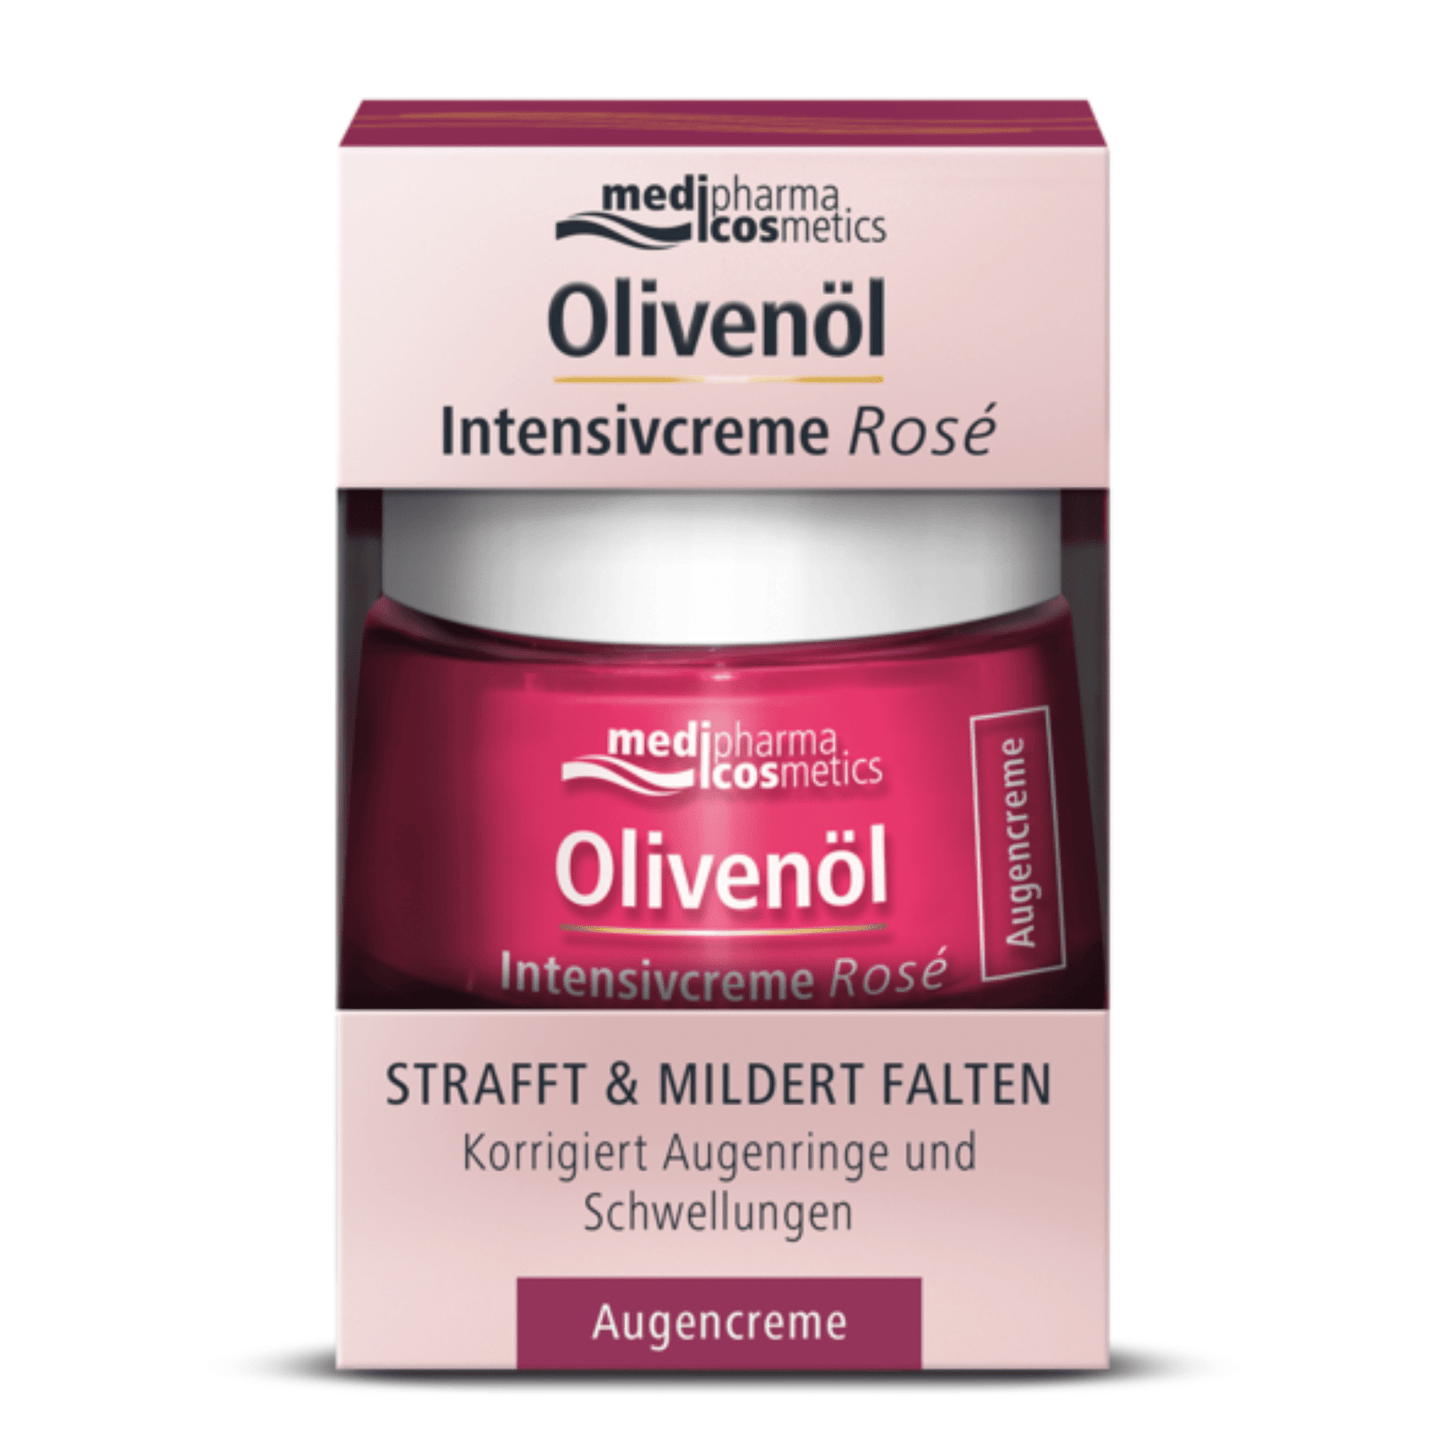 Alternate Image of Olivenol Intensivcreme Rose Augencreme